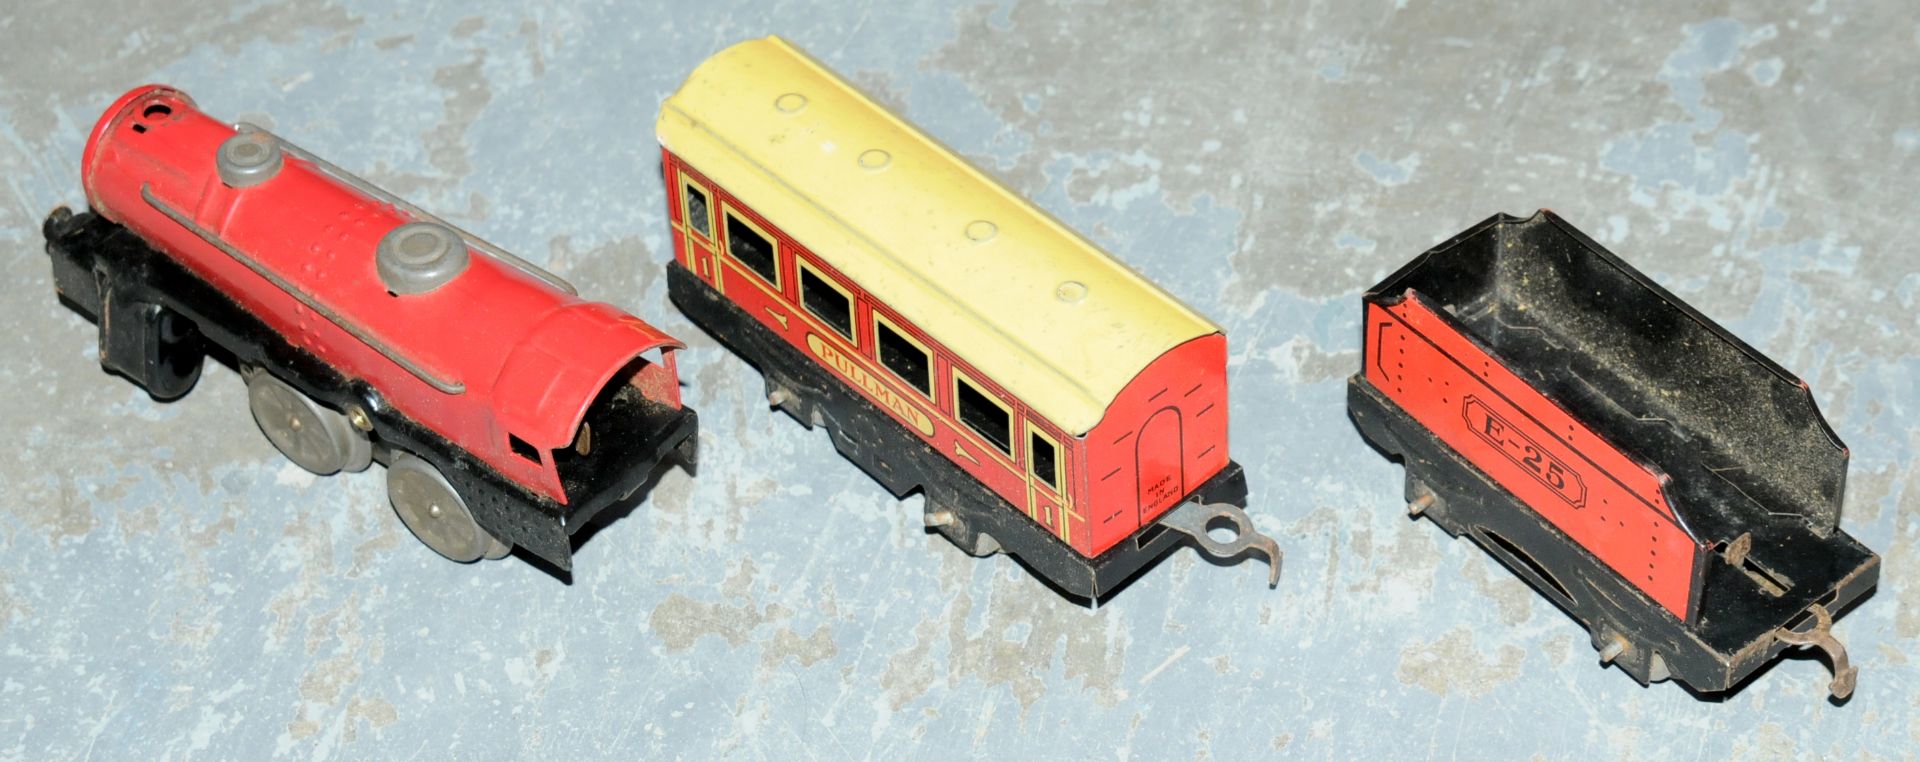 Marx Toys Clockwork Tinplate Trains Set - Image 5 of 6